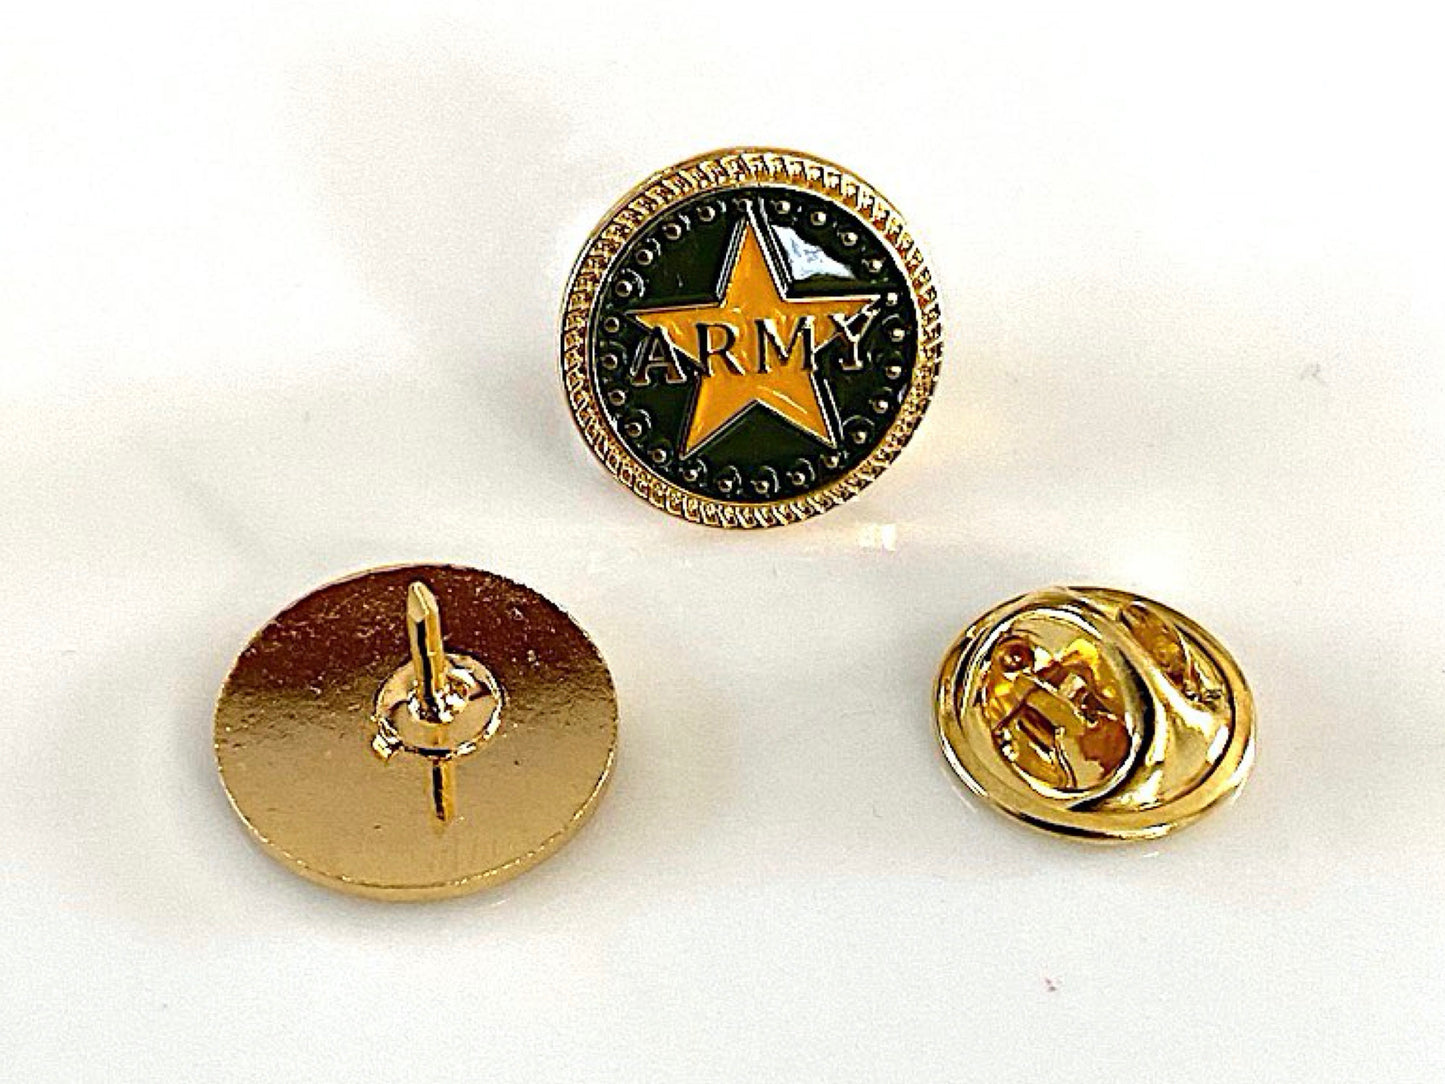 Army Lapel Pin